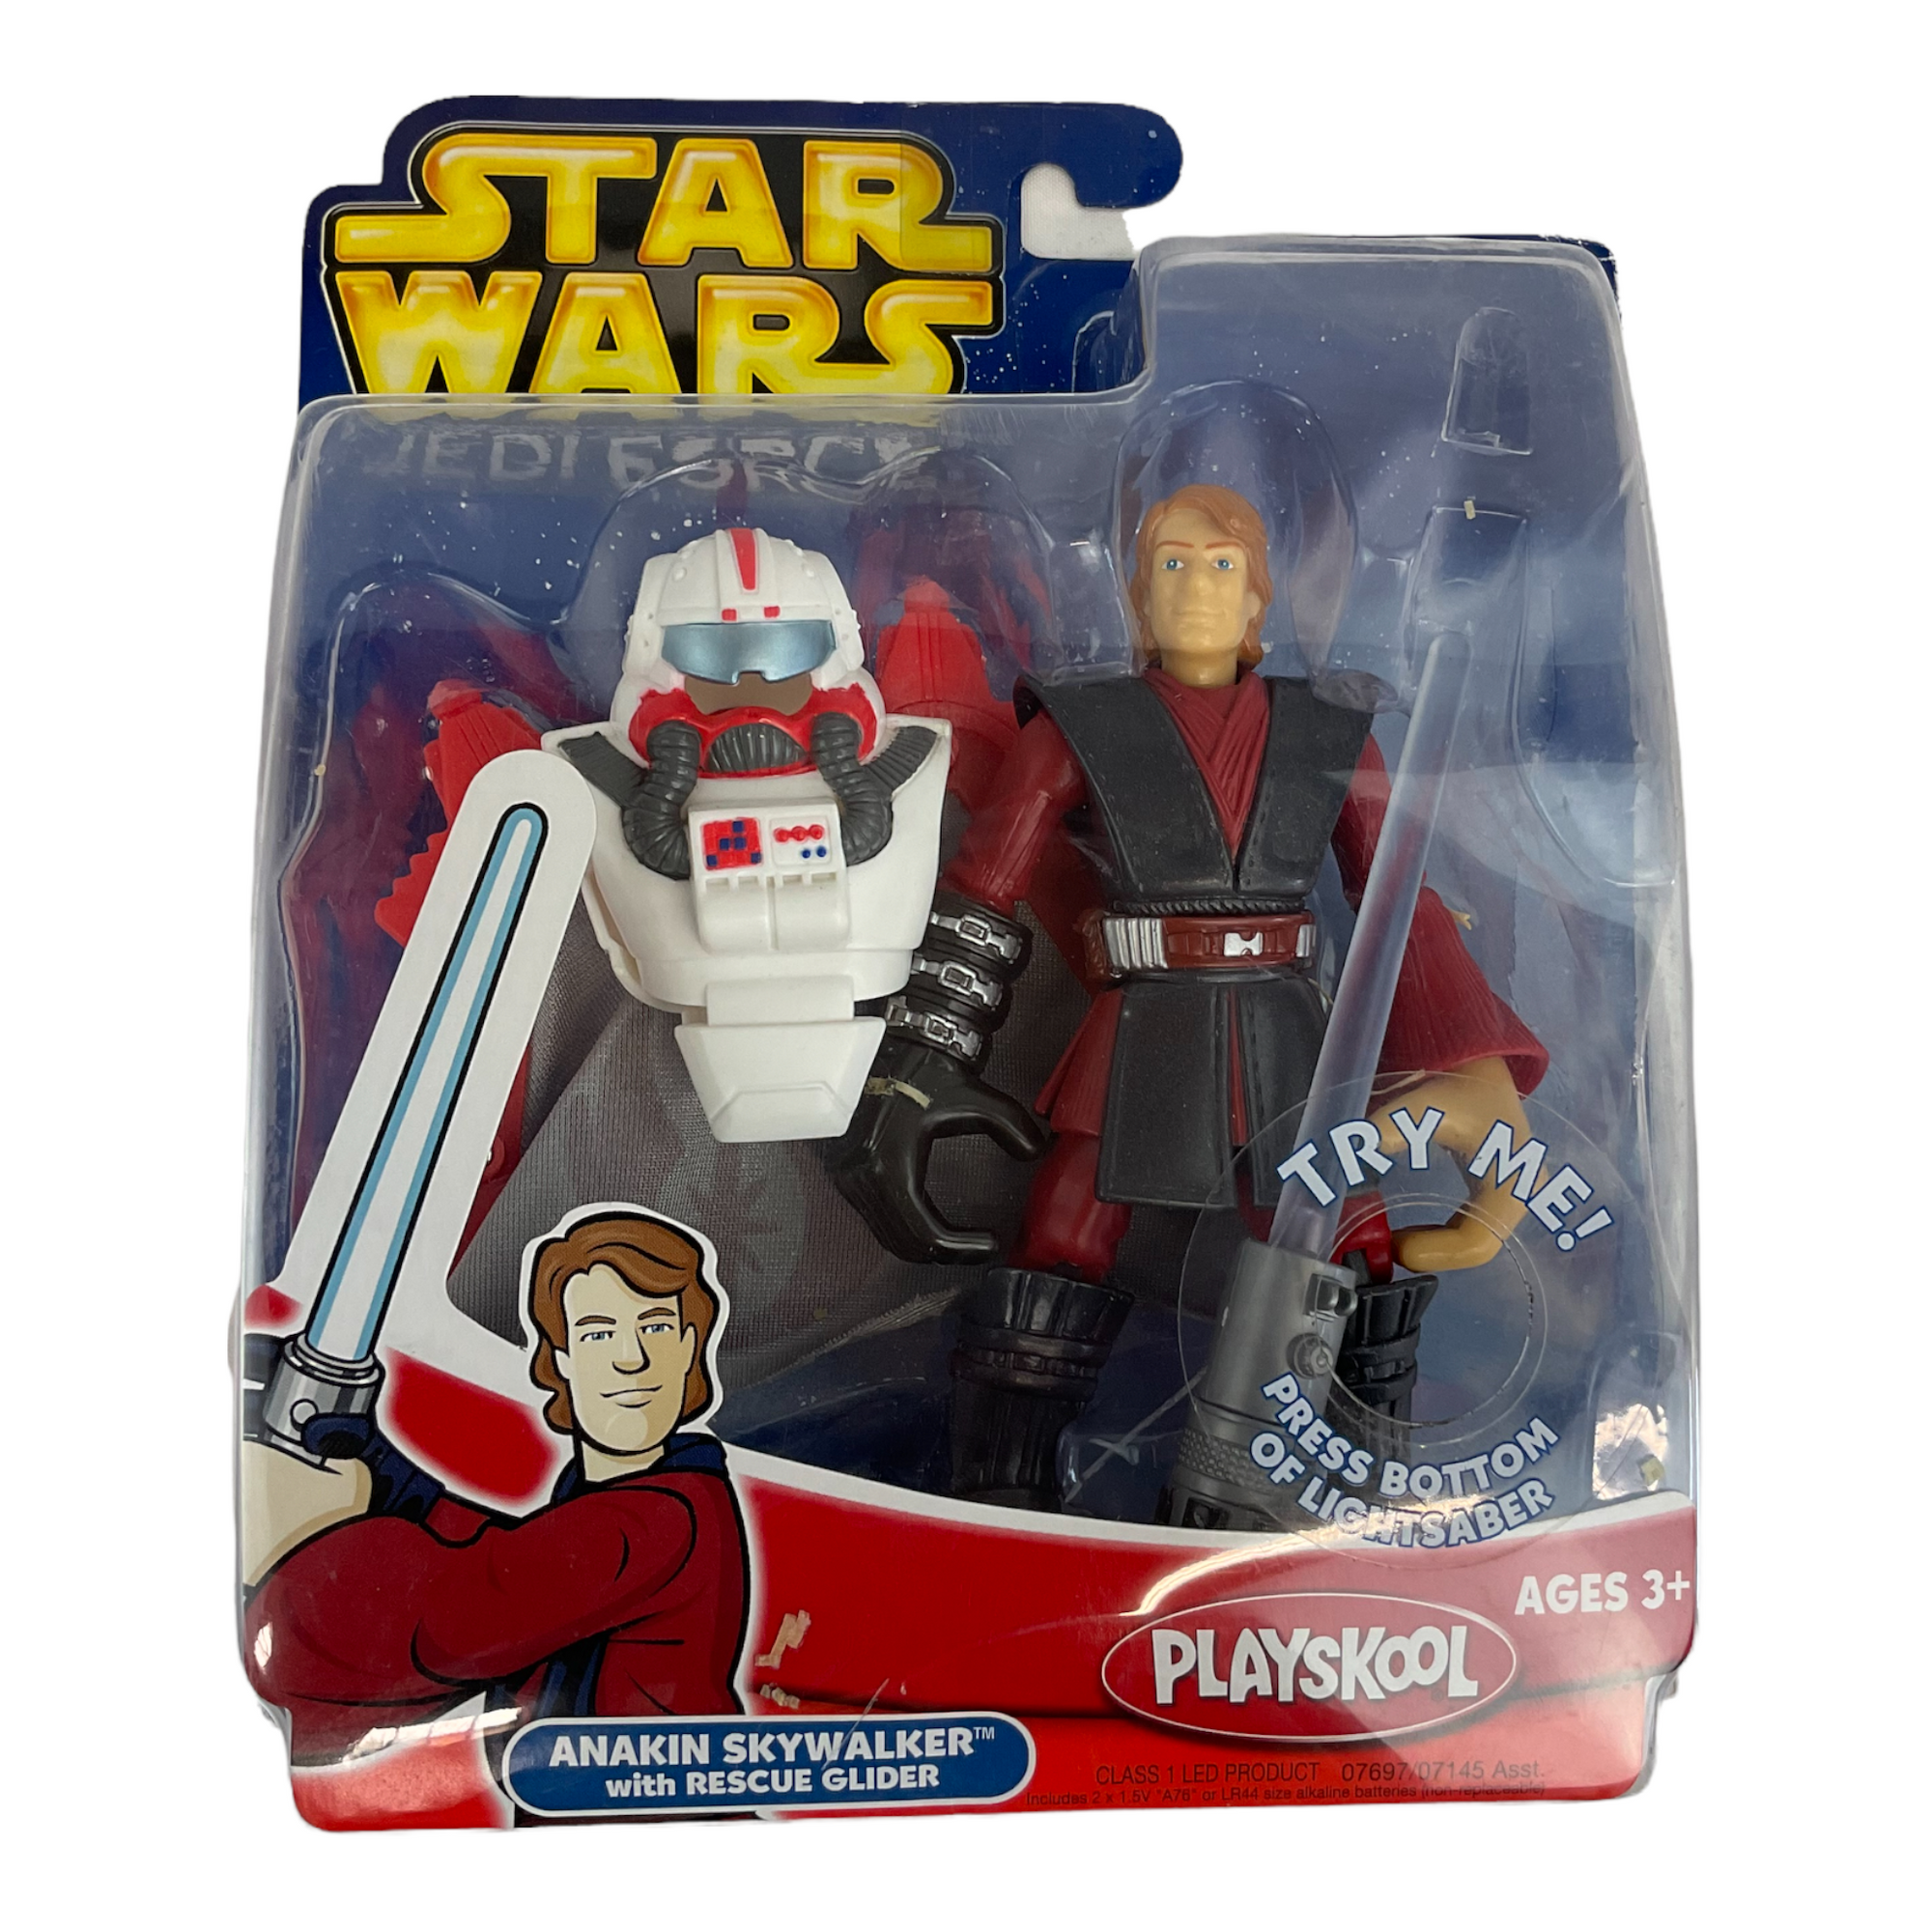 Star Wars Jedi Force Playskool Anakin Skywalker Figure w/ Rescue Glider